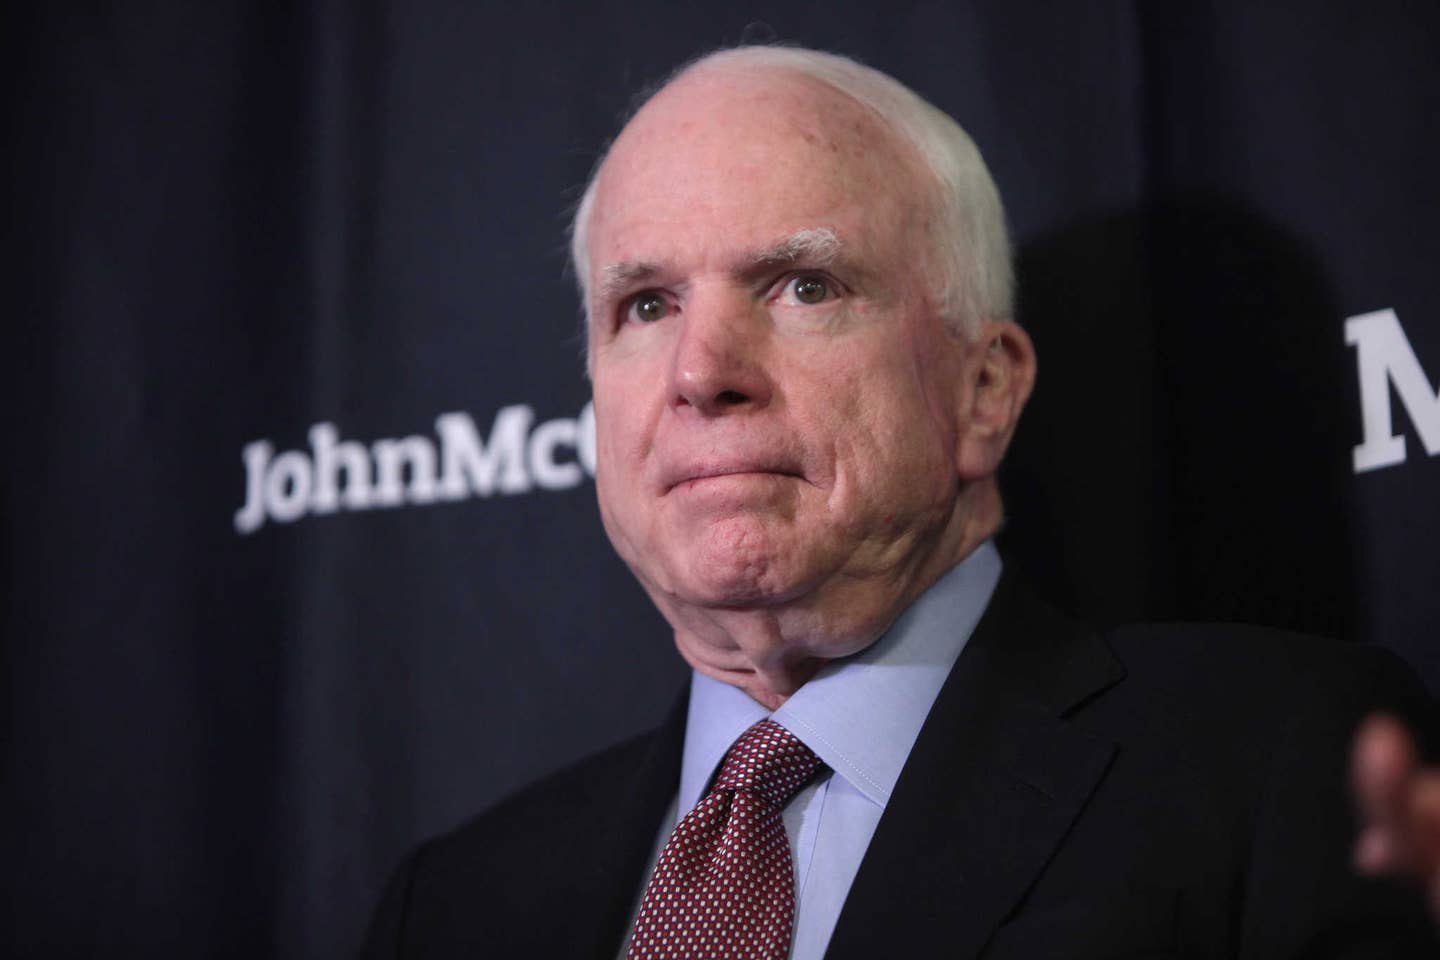 Senator John McCain campaigns for re-election to the senate in 2016. Photo: Gage Skidmore via Flickr